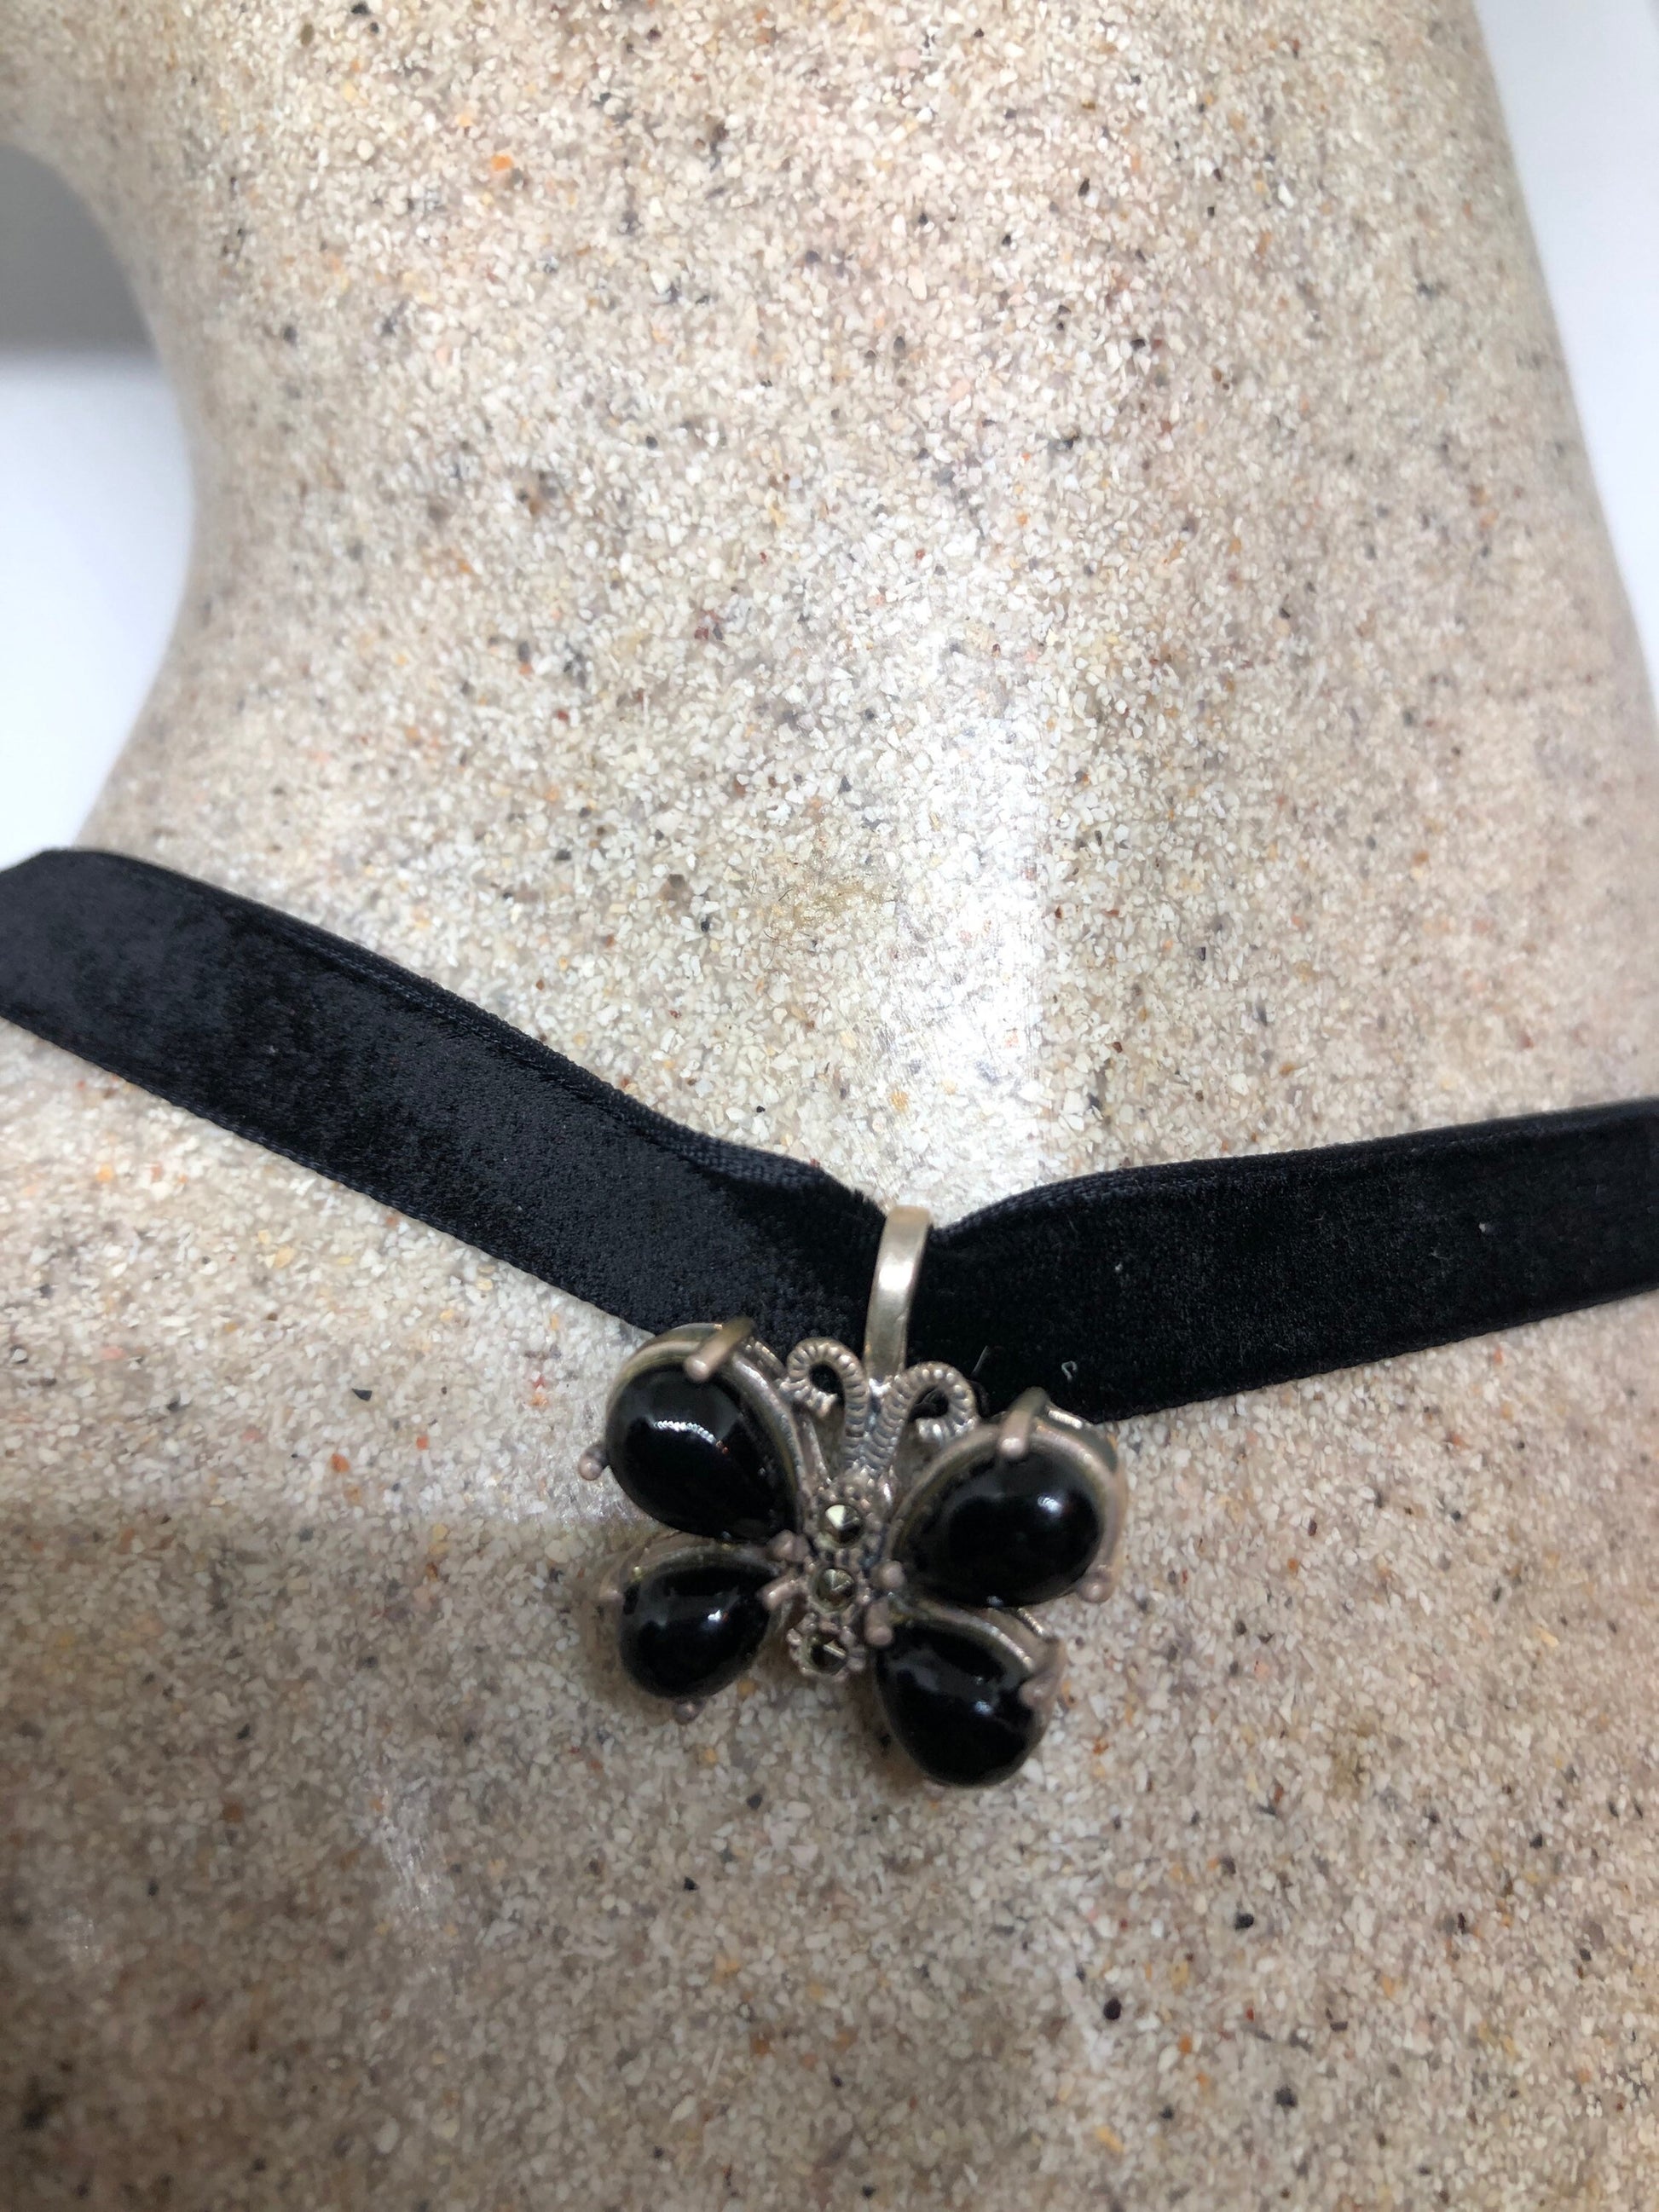 Vintage Black Onyx Marcasite Butterfly Choker 925 Sterling Silver Deco Pendant Necklace